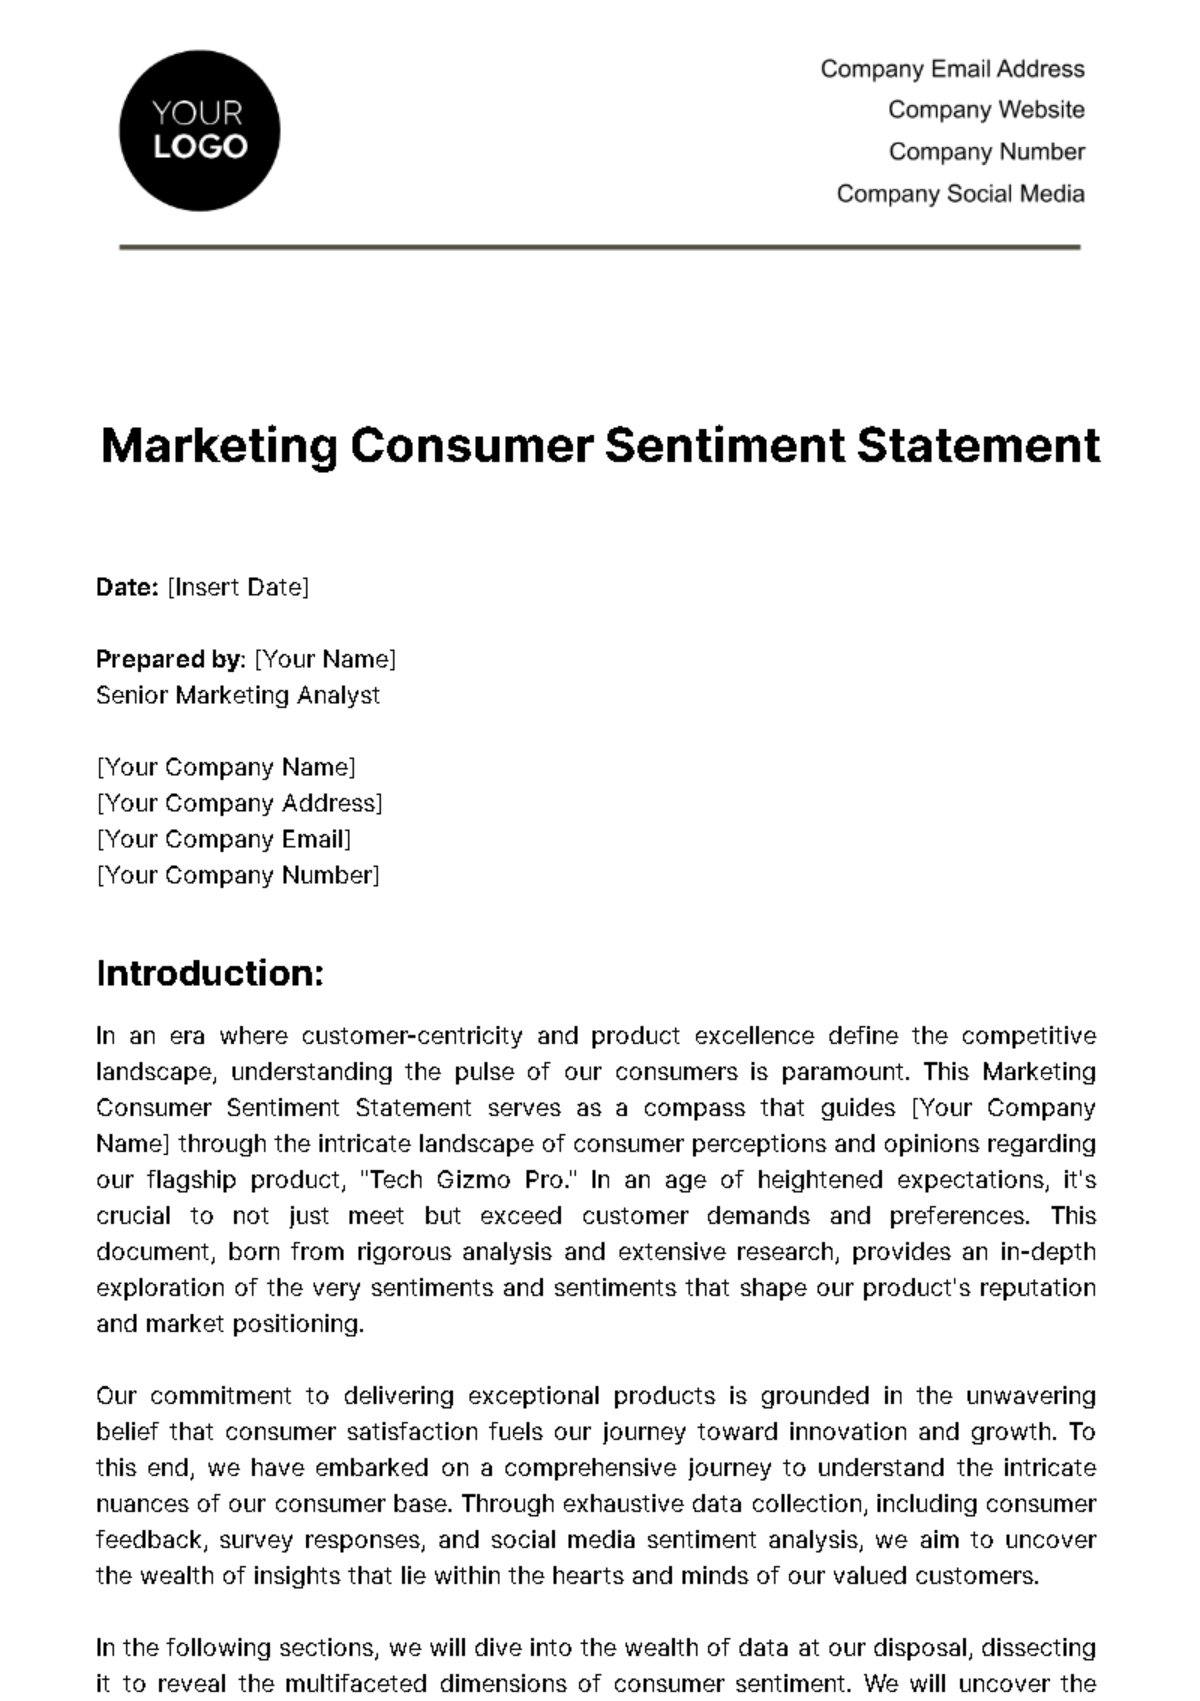 Marketing Consumer Sentiment Statement Template